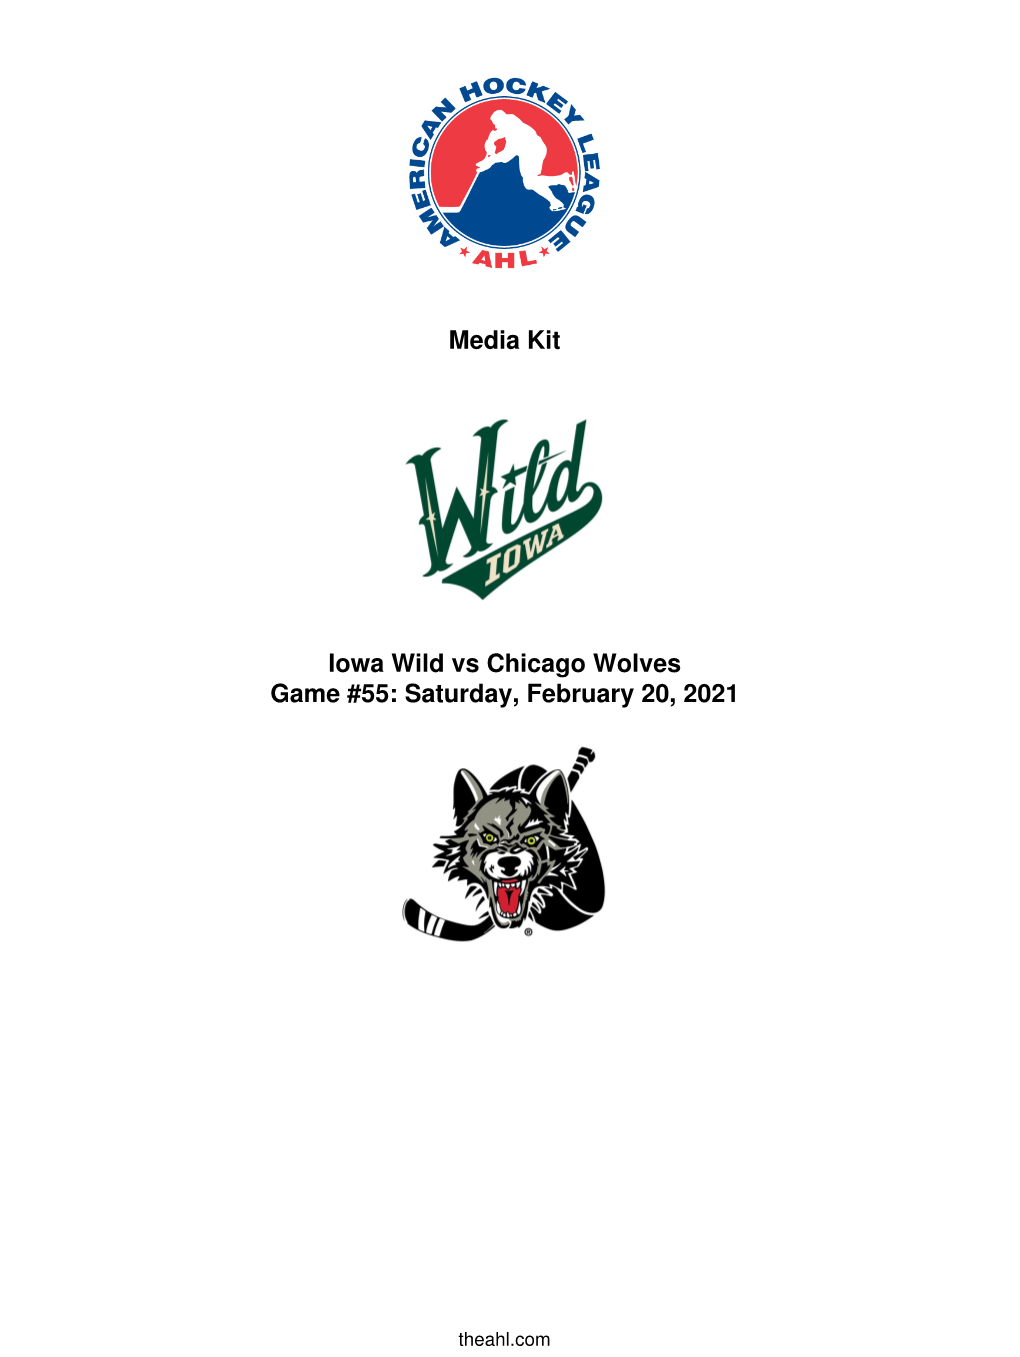 Media Kit Iowa Wild Vs Chicago Wolves Game #55: Saturday, February 20, 2021